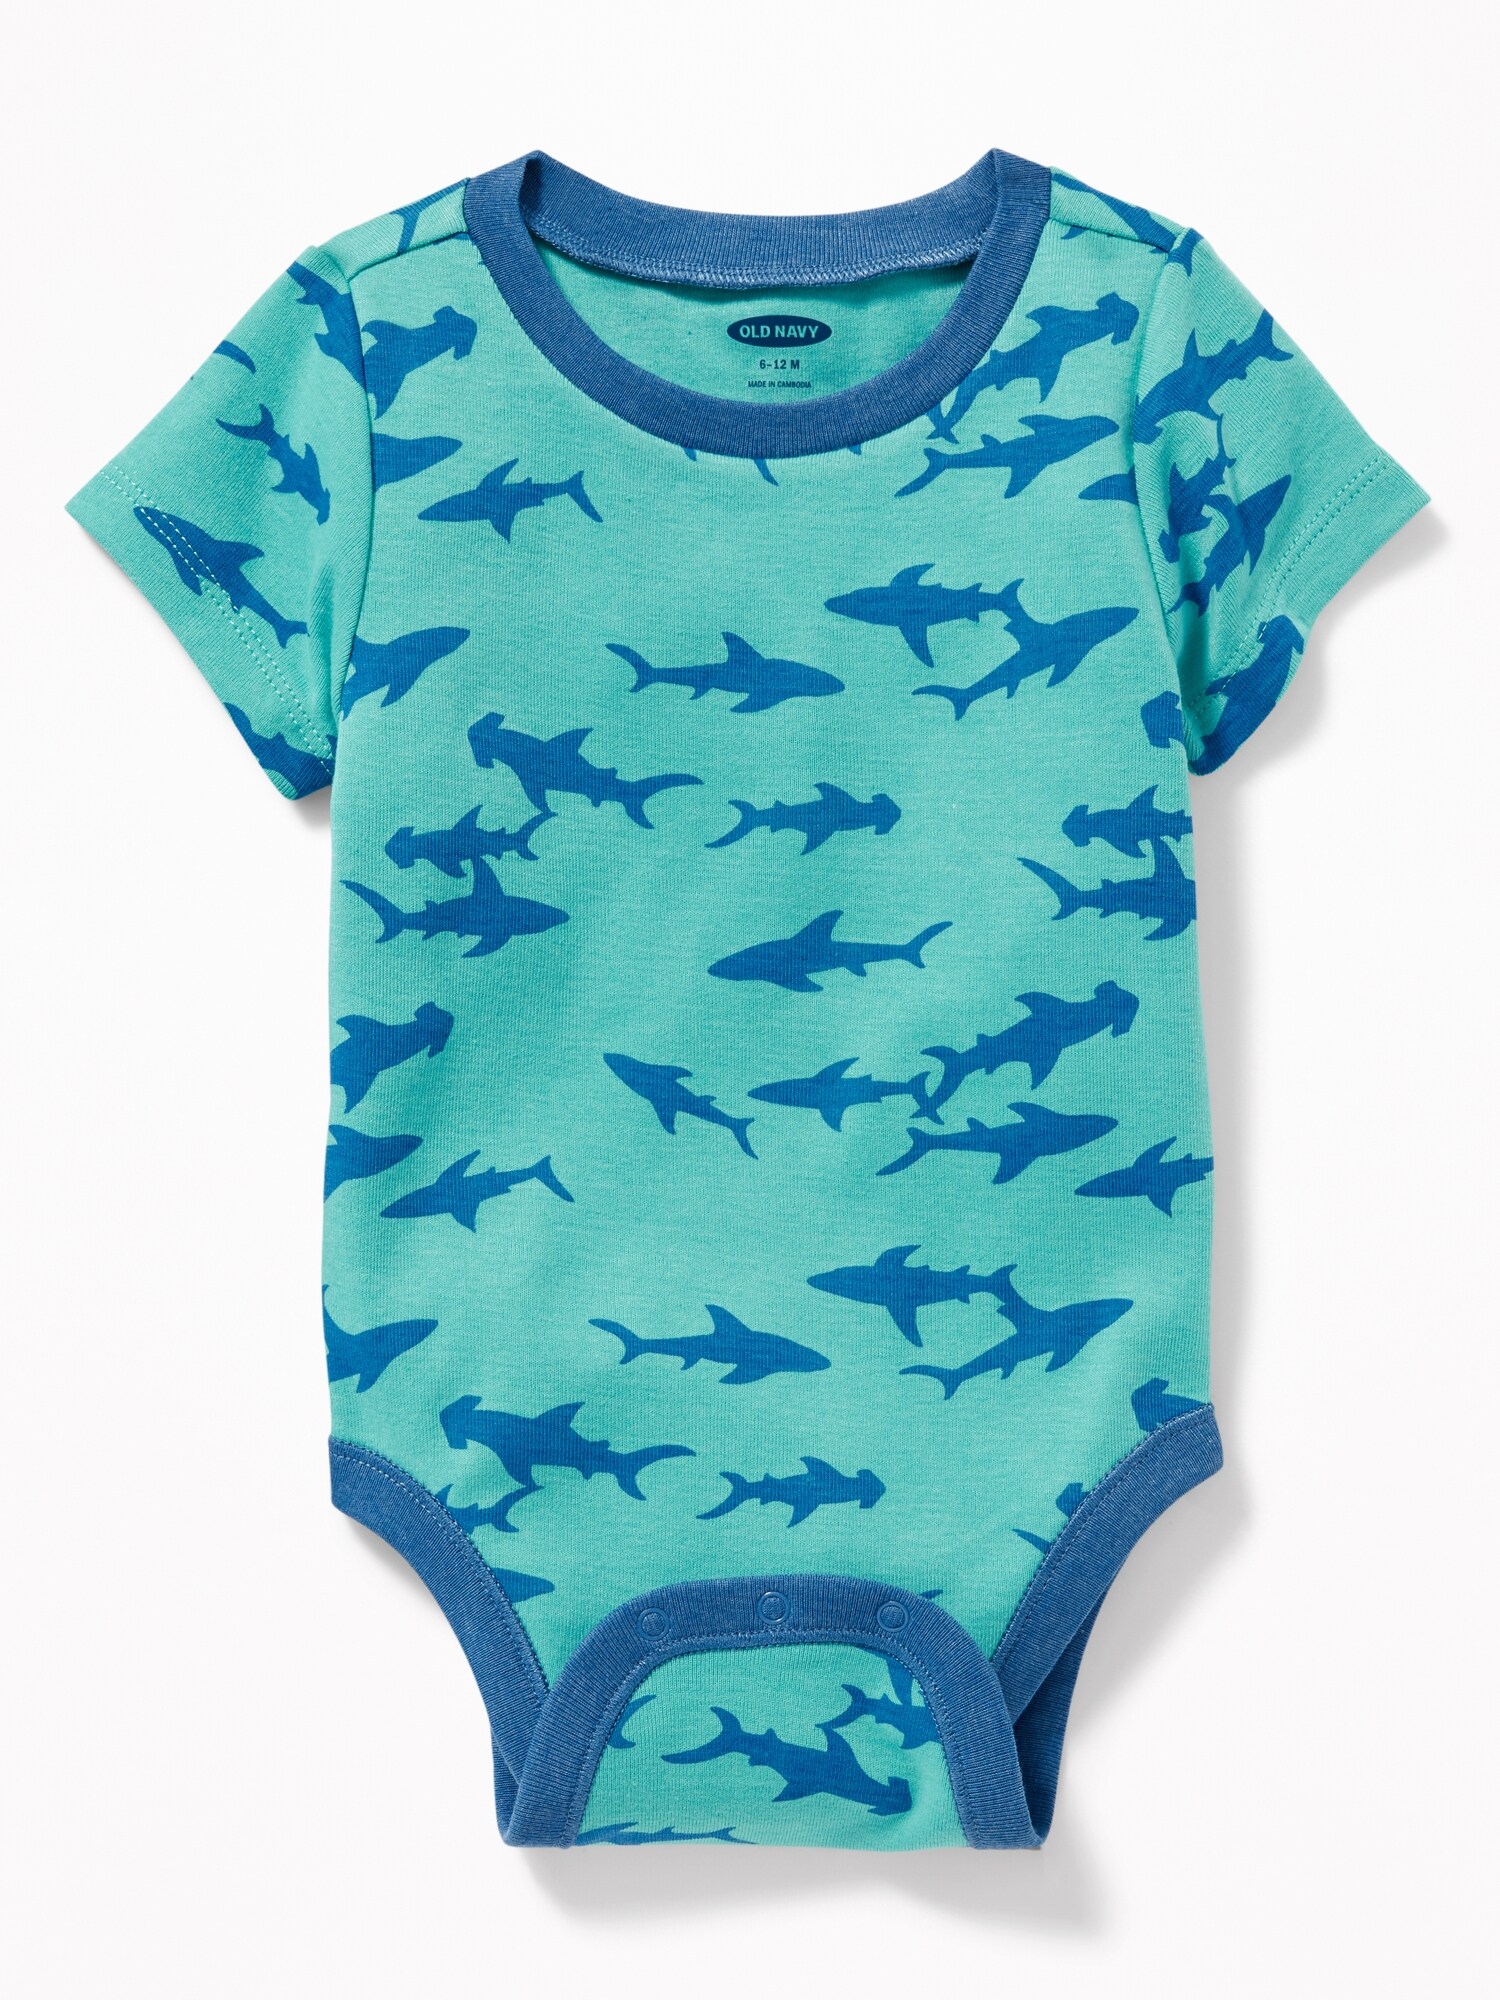 Great White Shark Organic Cotton Baby Onesie / Bodysuit – Dusty Blue 0/3 Months / Light Blue